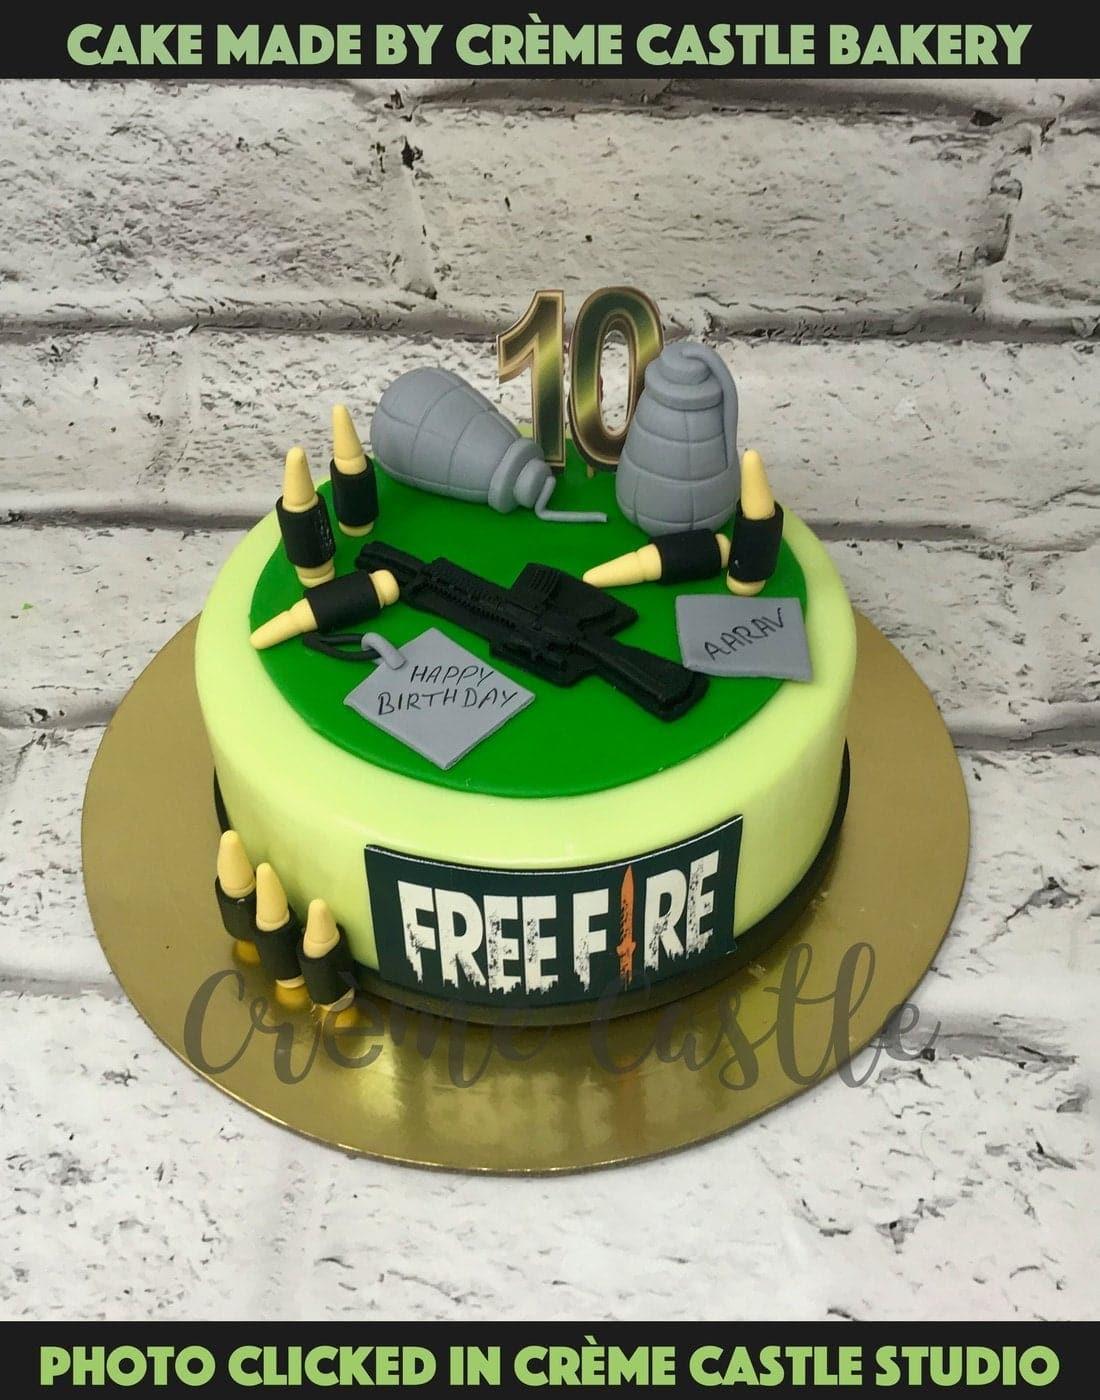 Free Fire Bullet Design Cake - Creme Castle